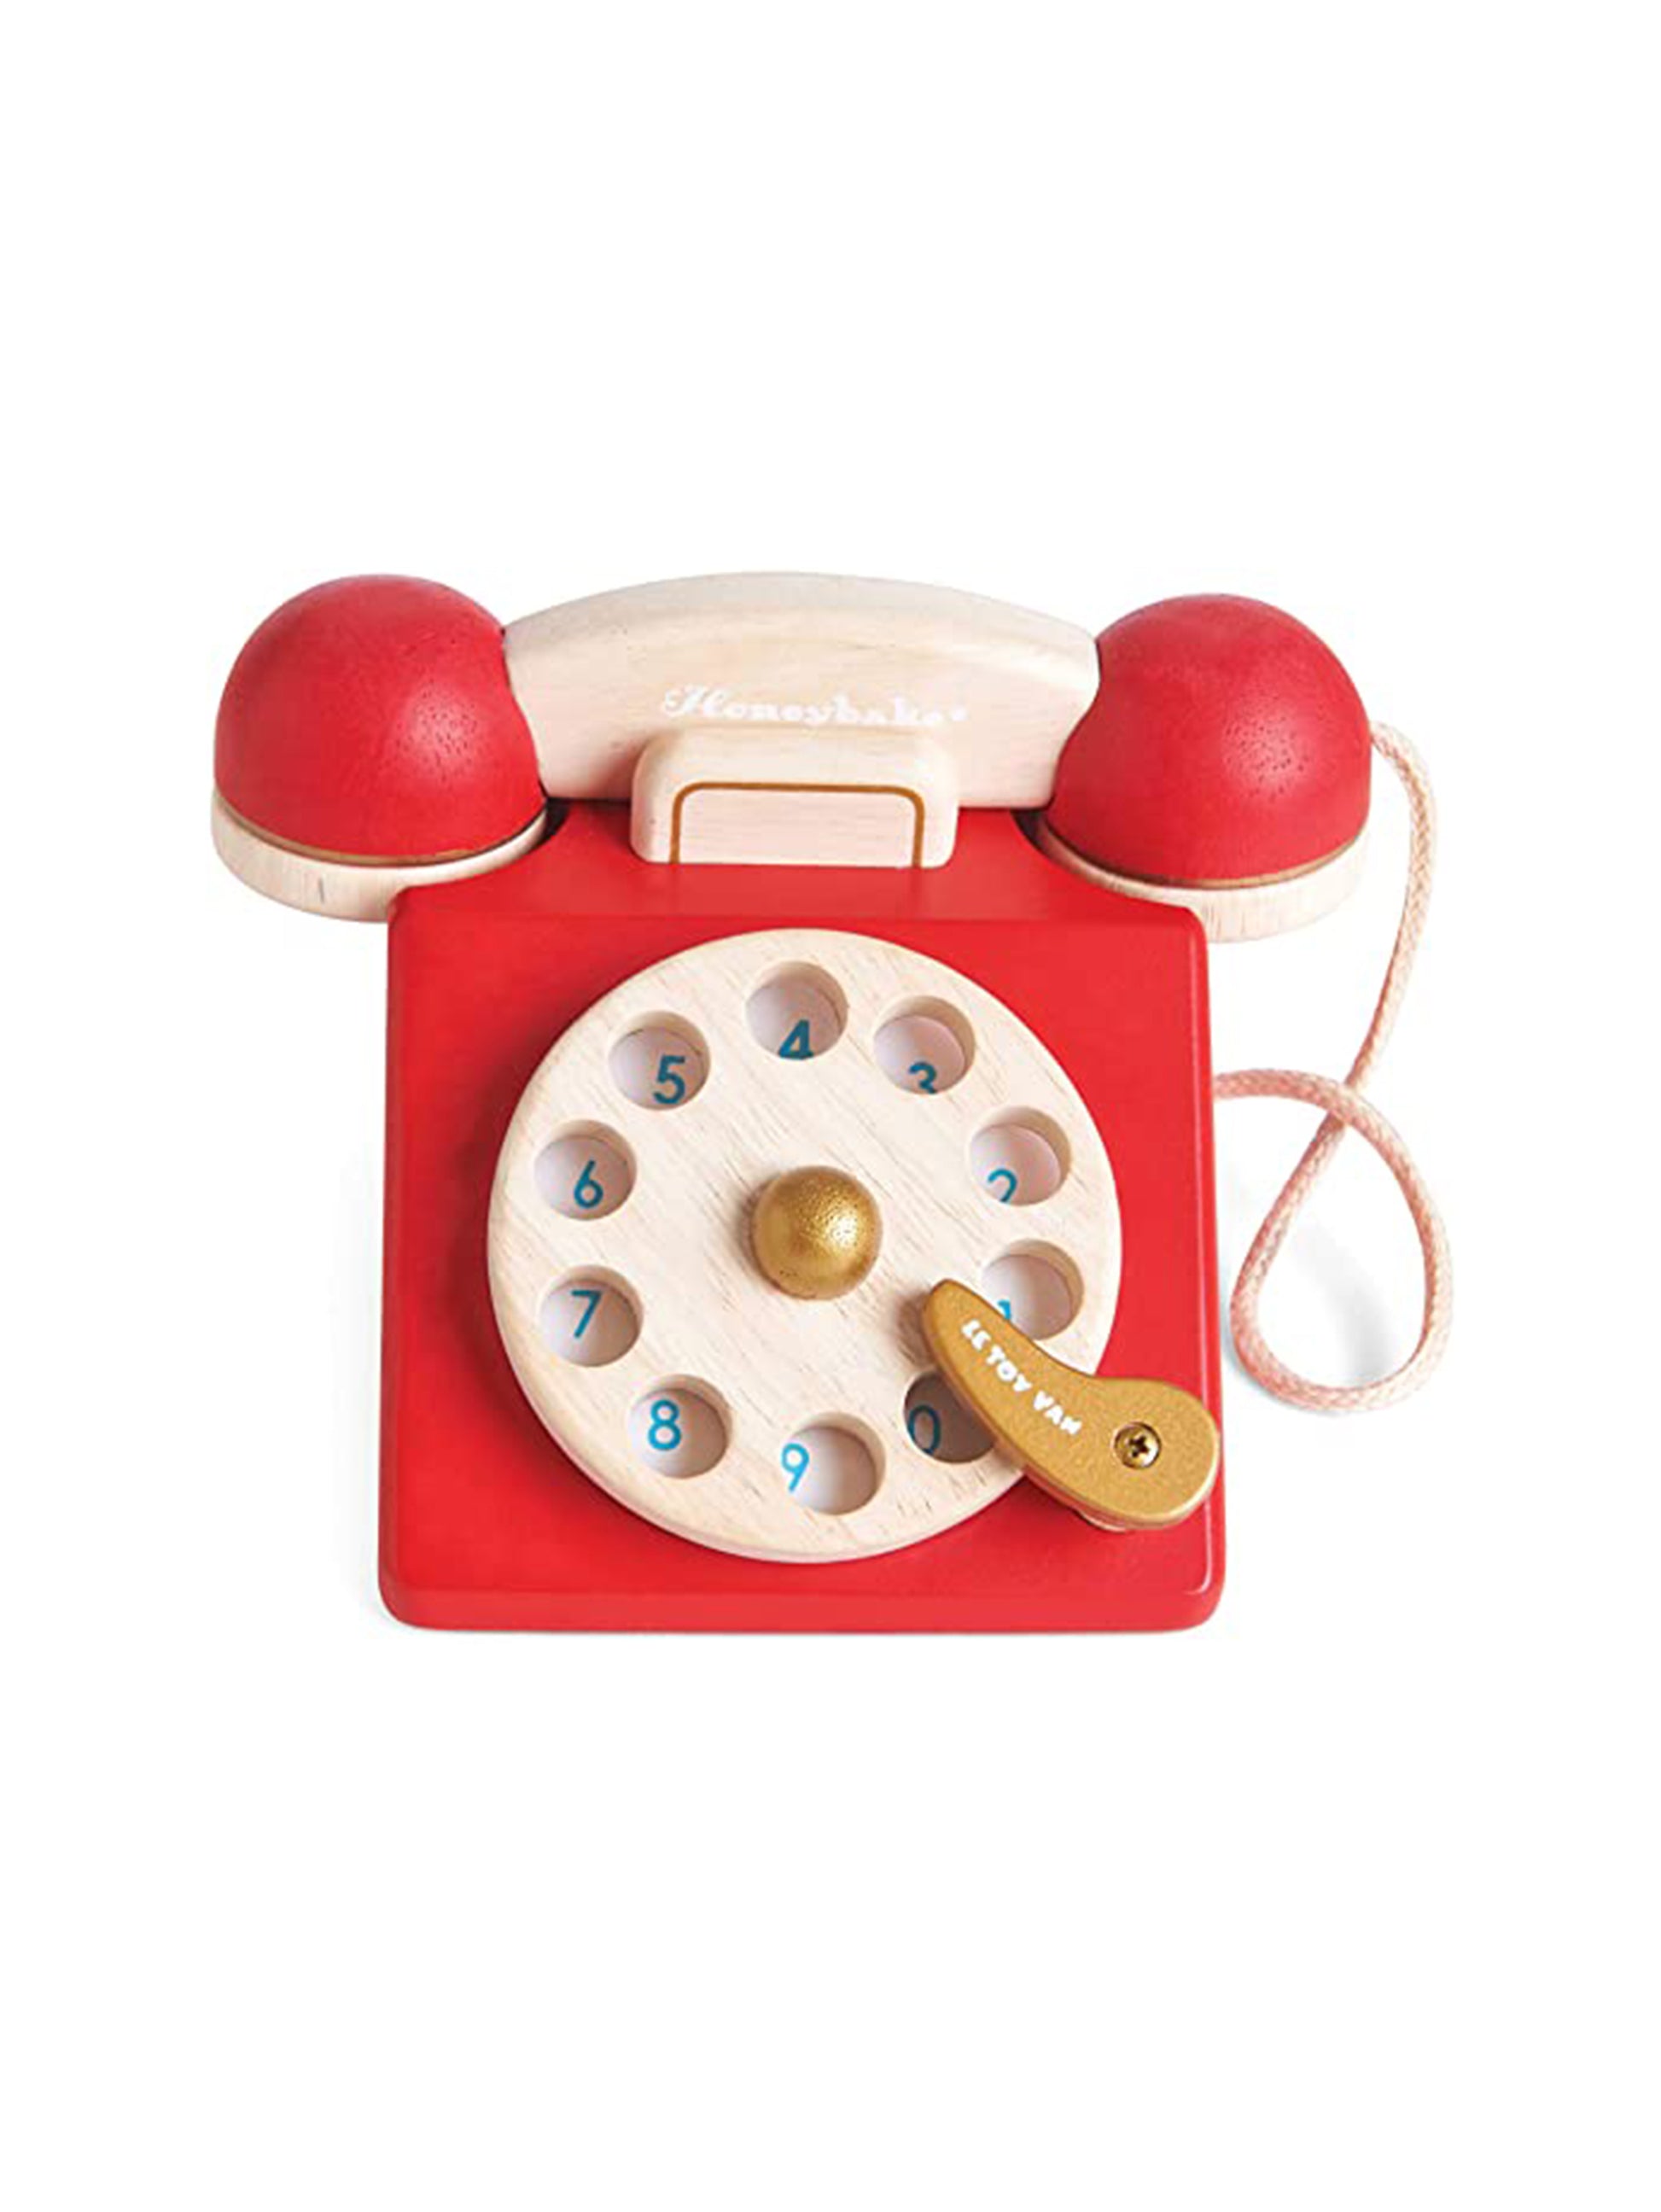 Le Toy Van Vintage Wooden Phone Weston Table